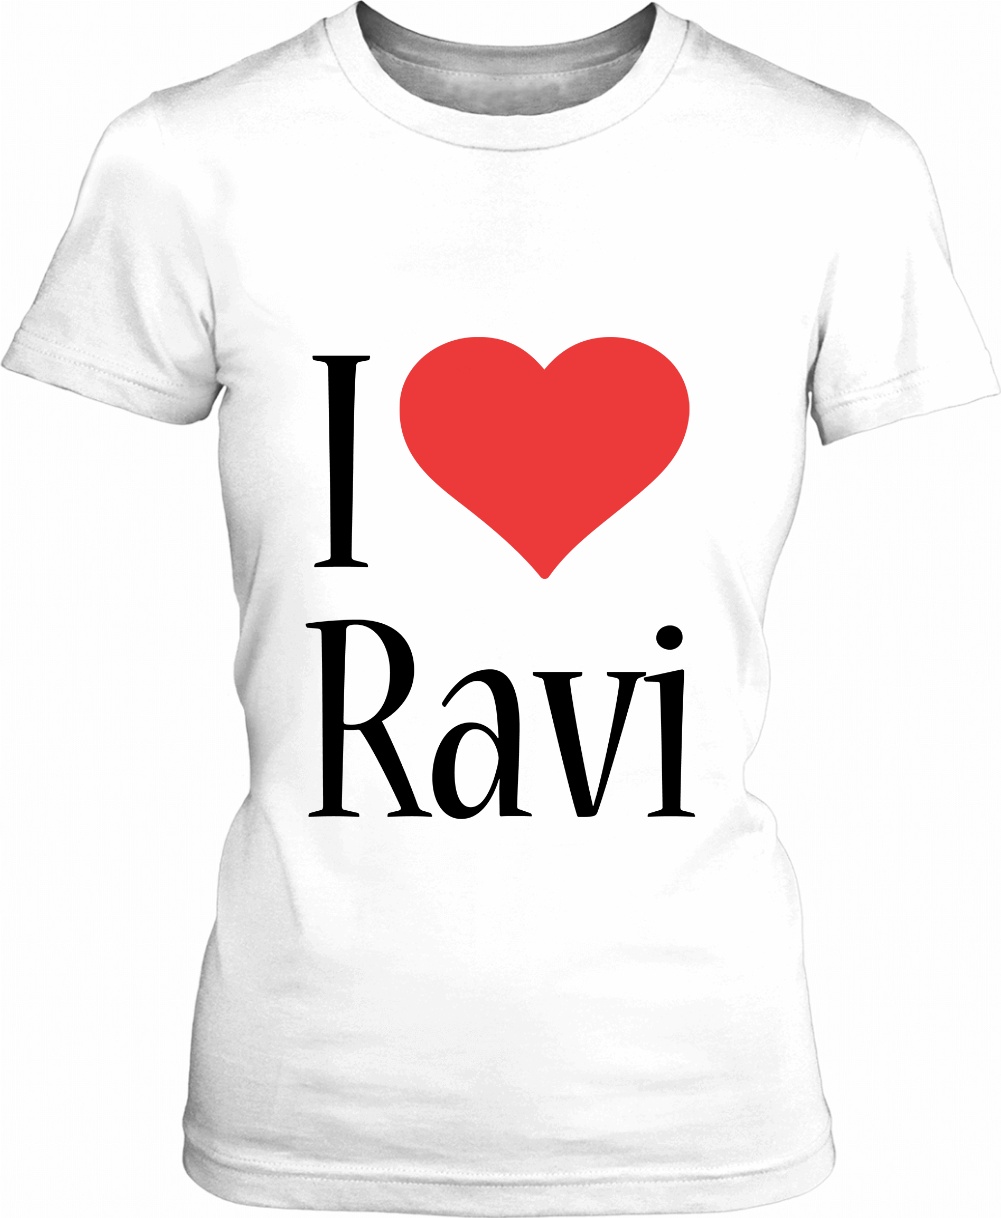 ravi love wallpaper,t shirt,clothing,white,top,text